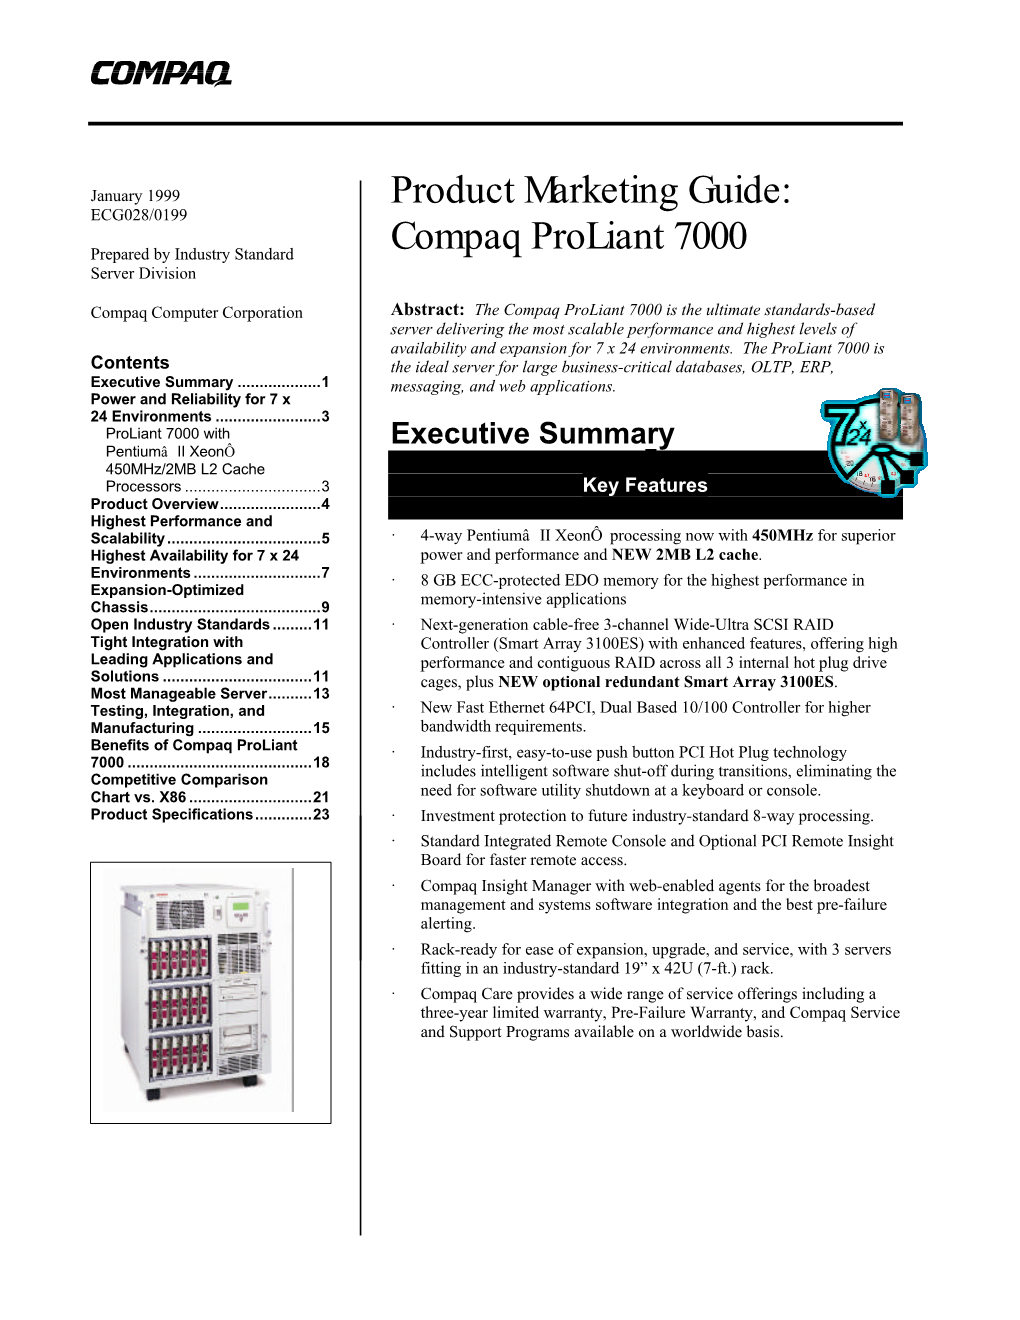 Product Marketing Guide: Compaq Proliant 7000 2